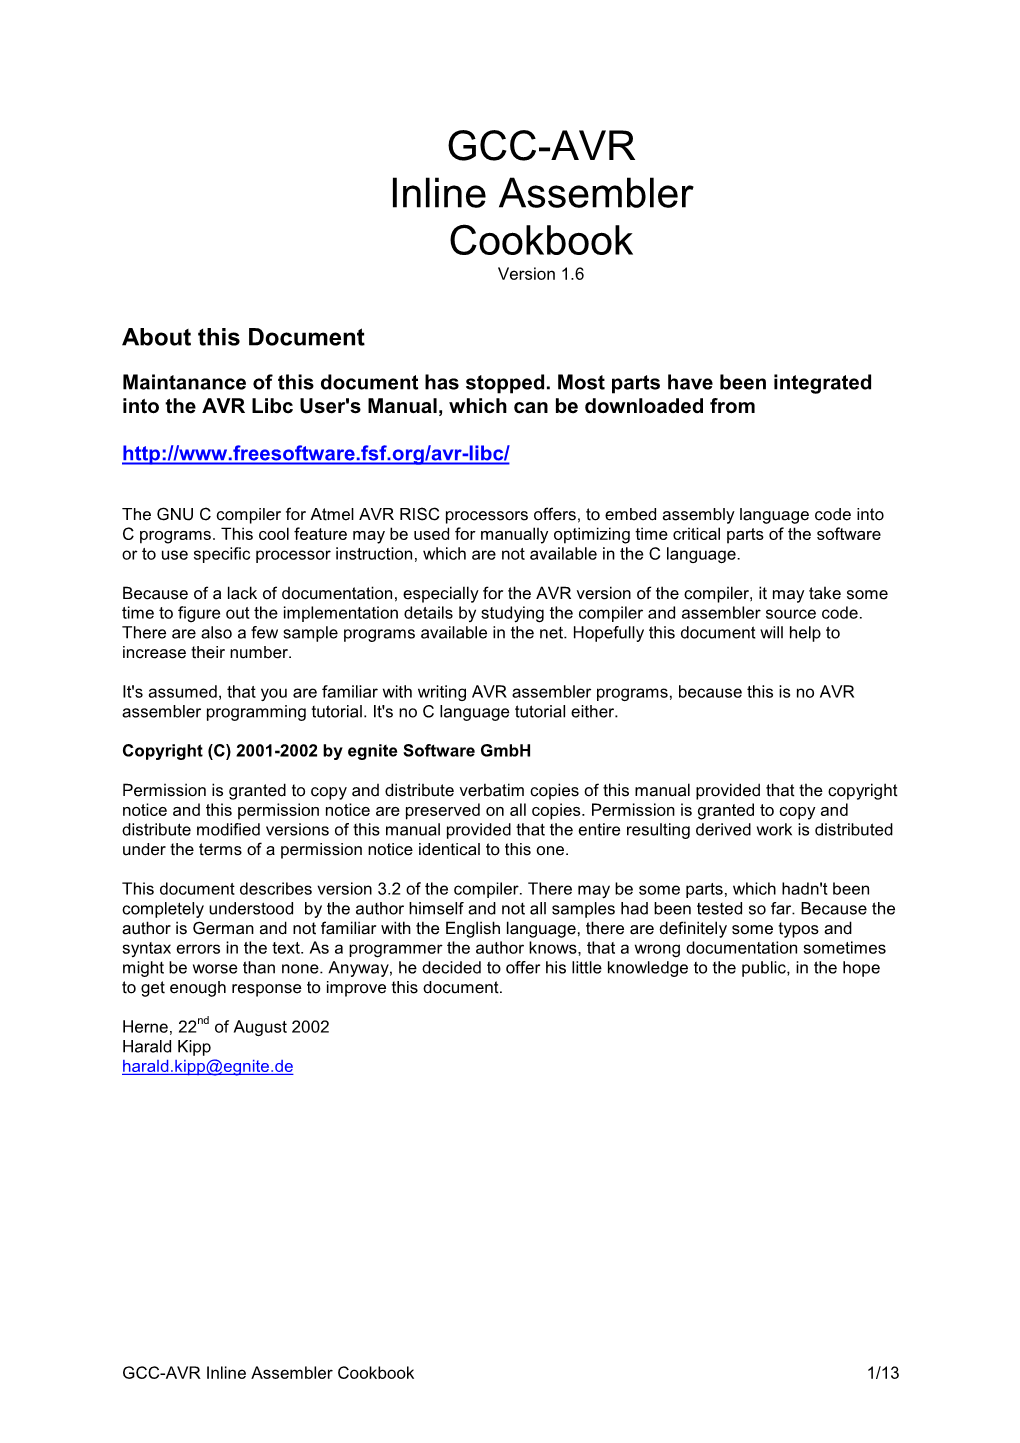 GCC-AVR Inline Assembler Cookbook Version 1.6